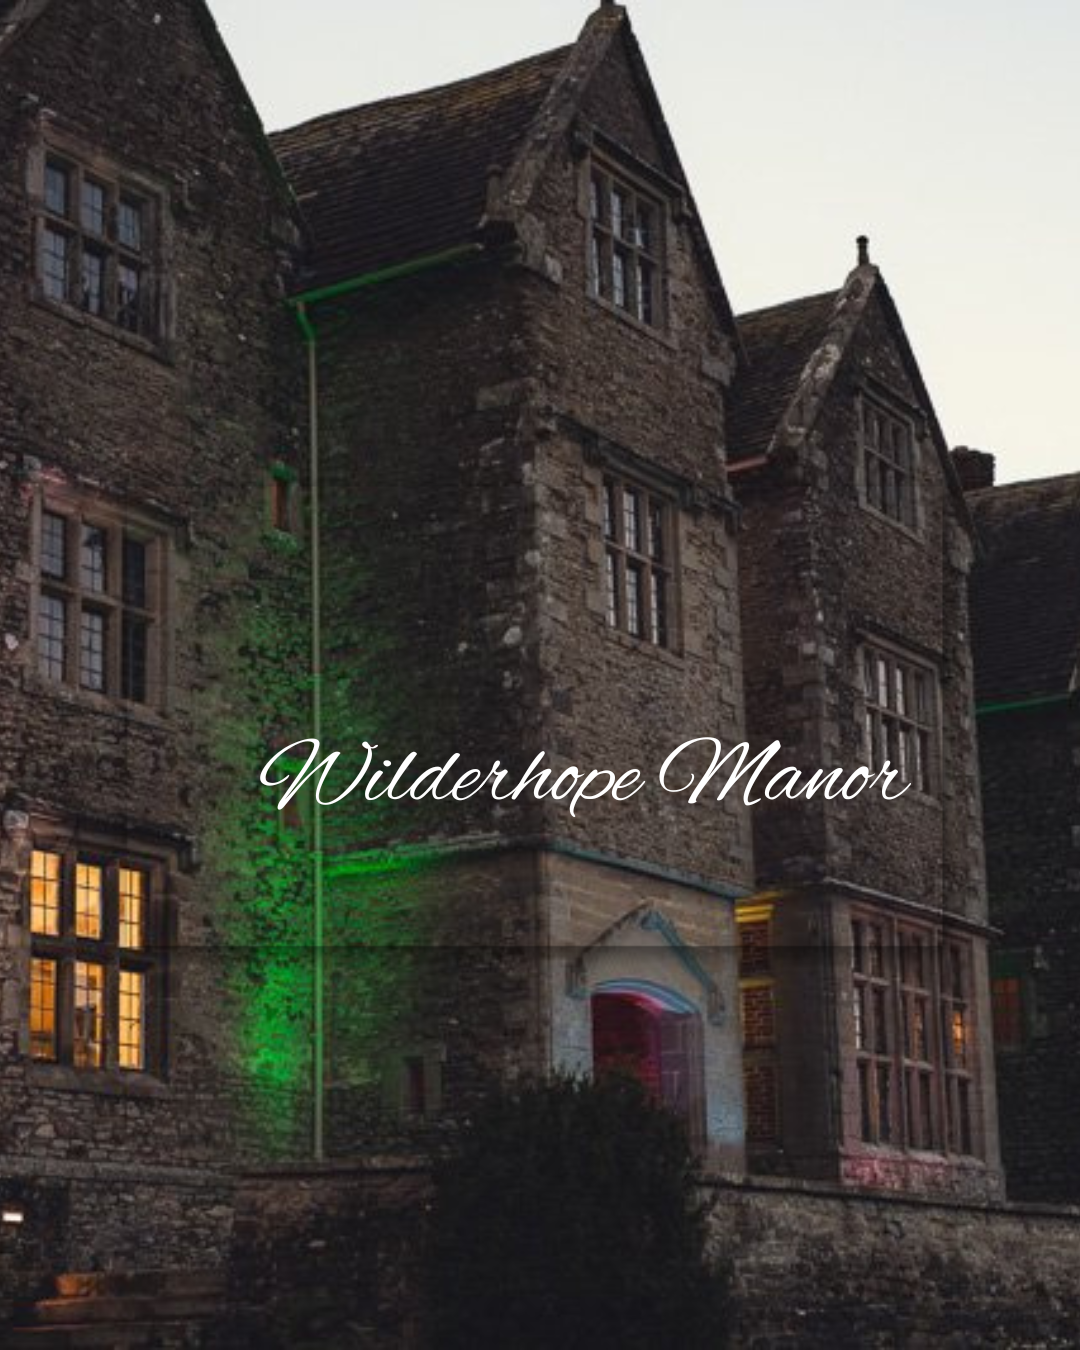 Wilderhope-Manor-Shropshire-Wedding-Venue.png